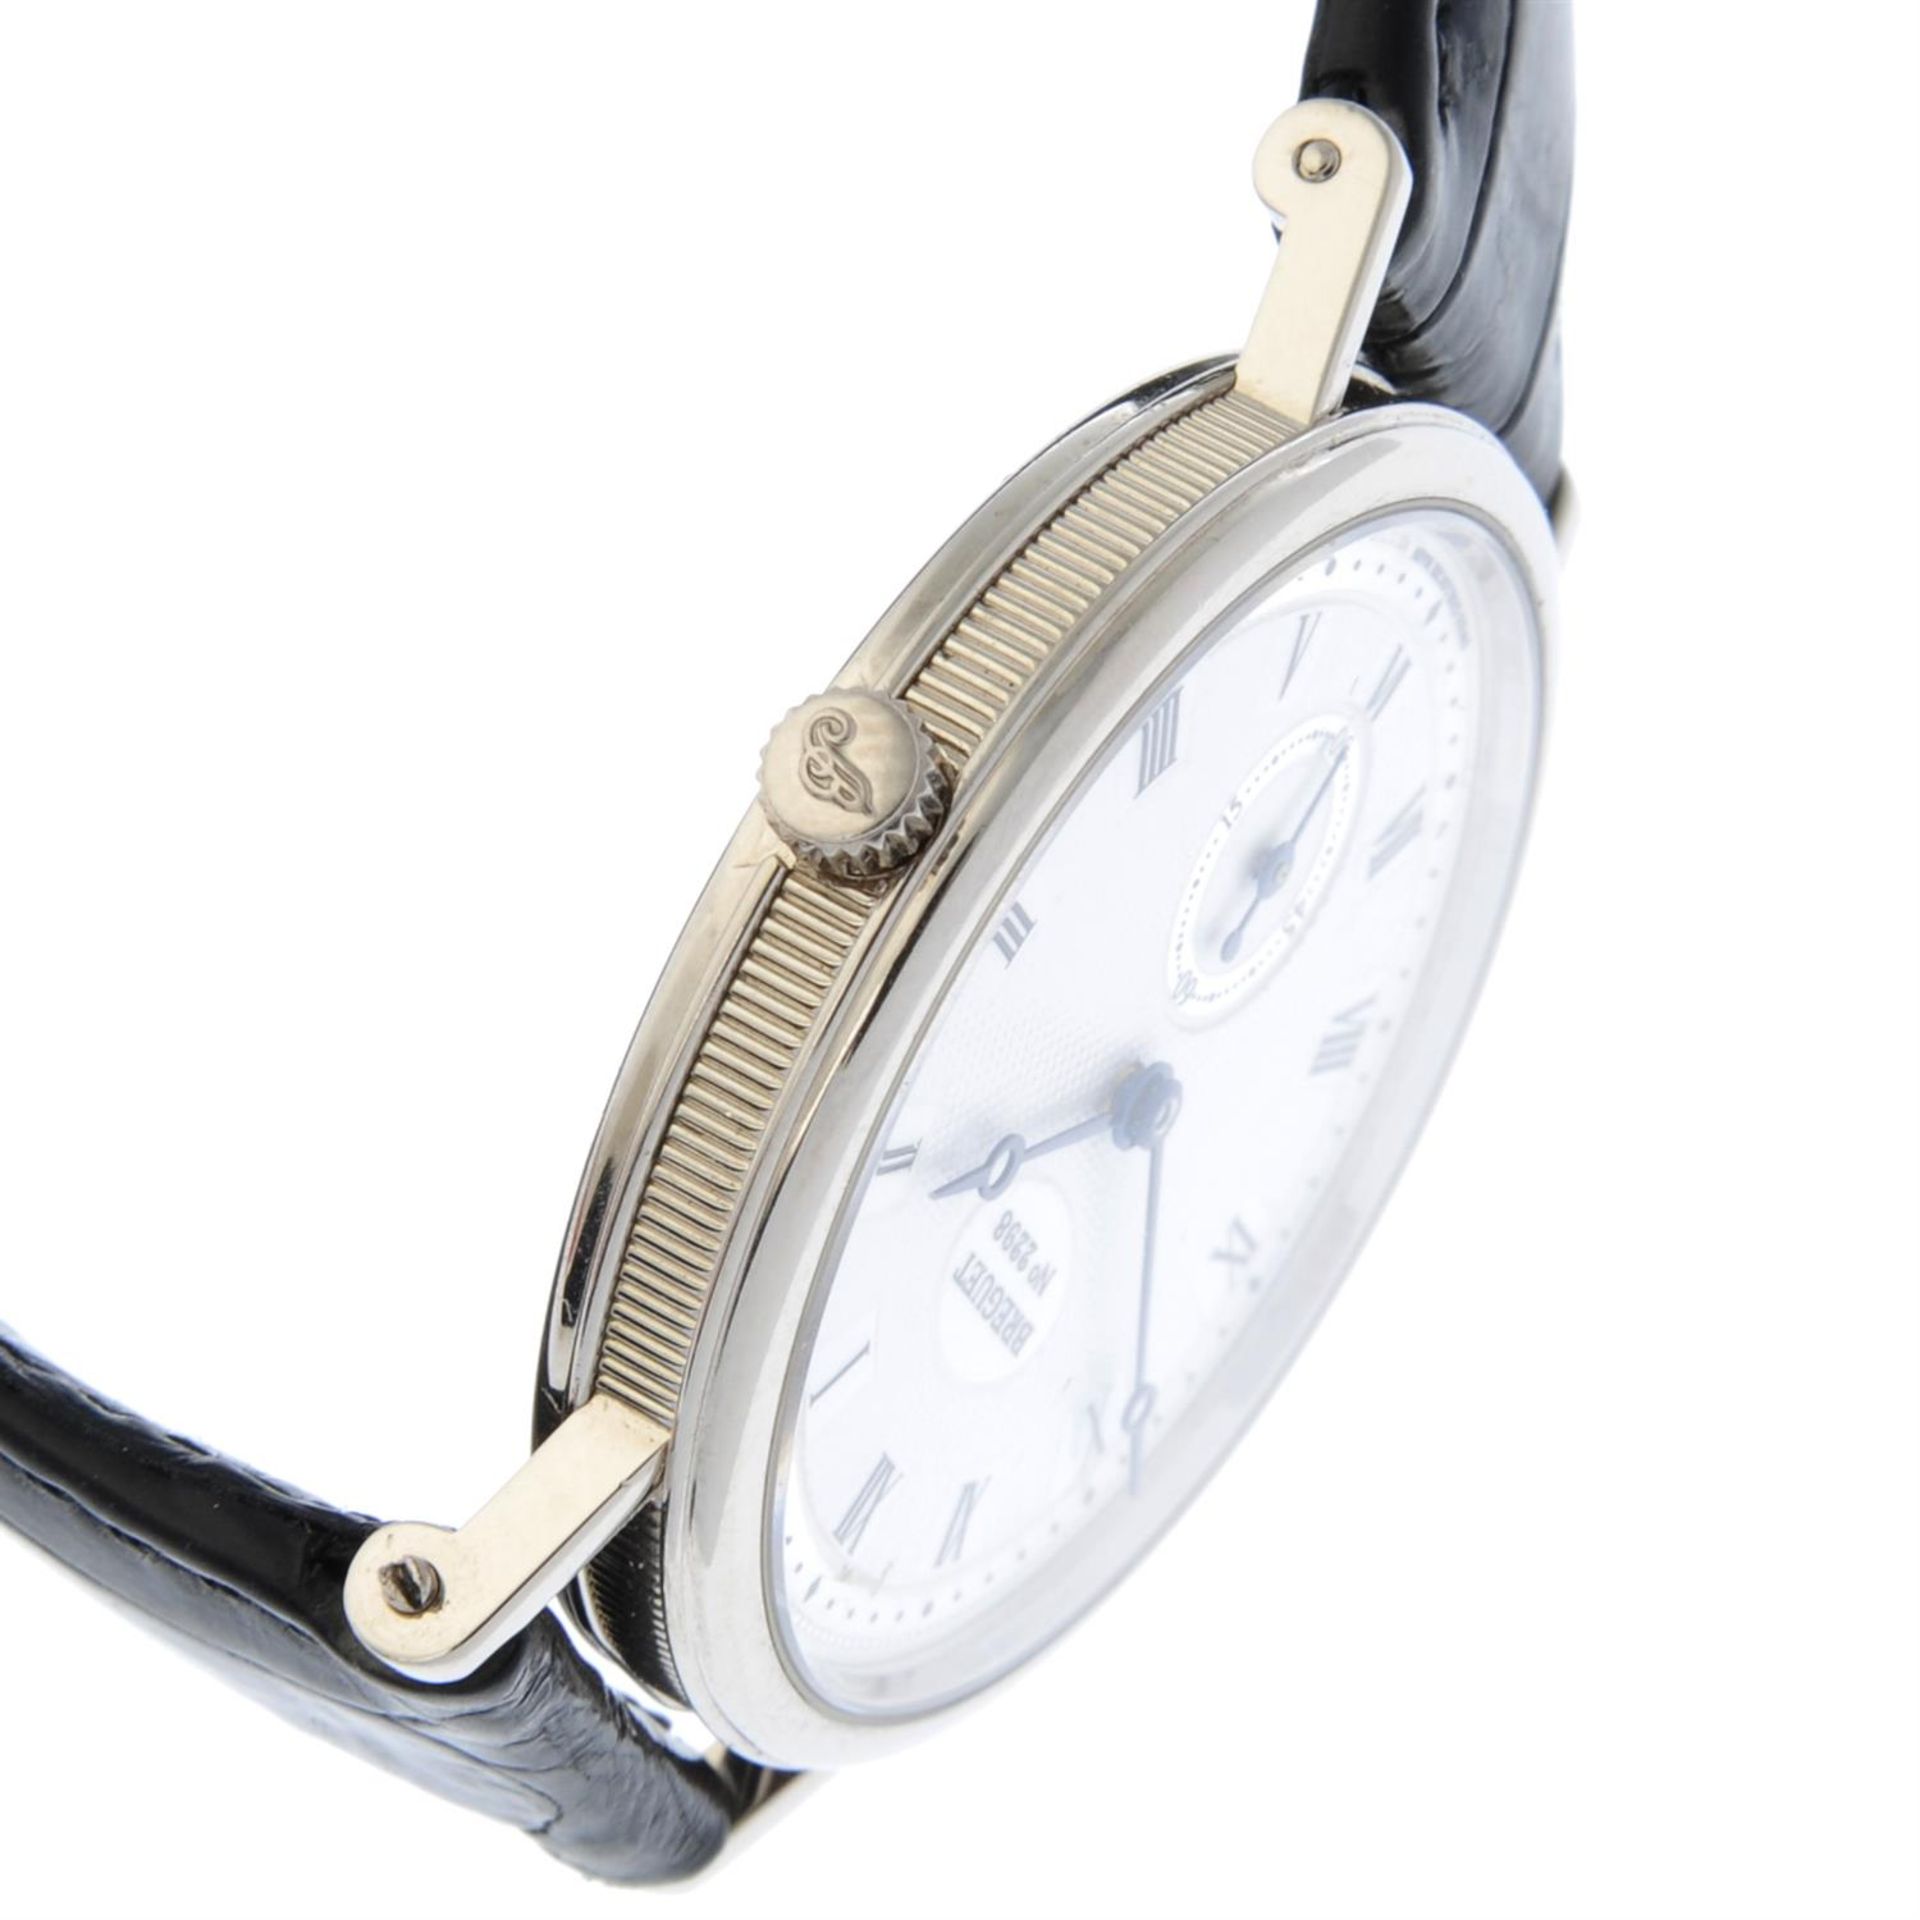 BREGUET - an 18ct white gold Classique 3910 wrist watch, 34mm. - Image 3 of 5